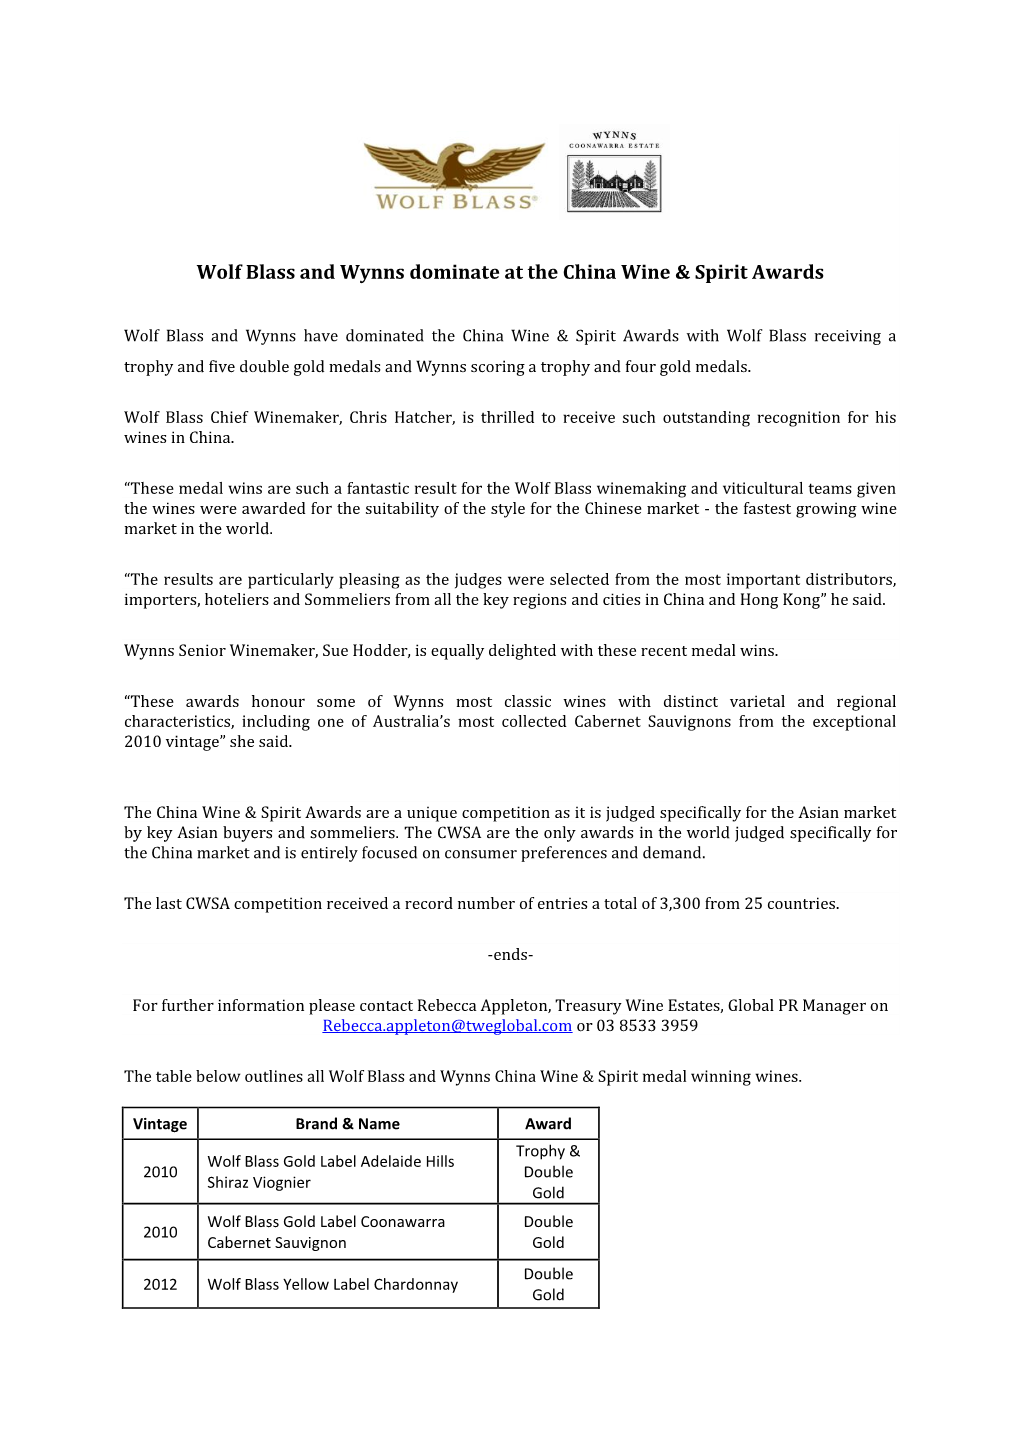 Wolf Blass and Wynns Dominate at the China Wine & Spirit Awards